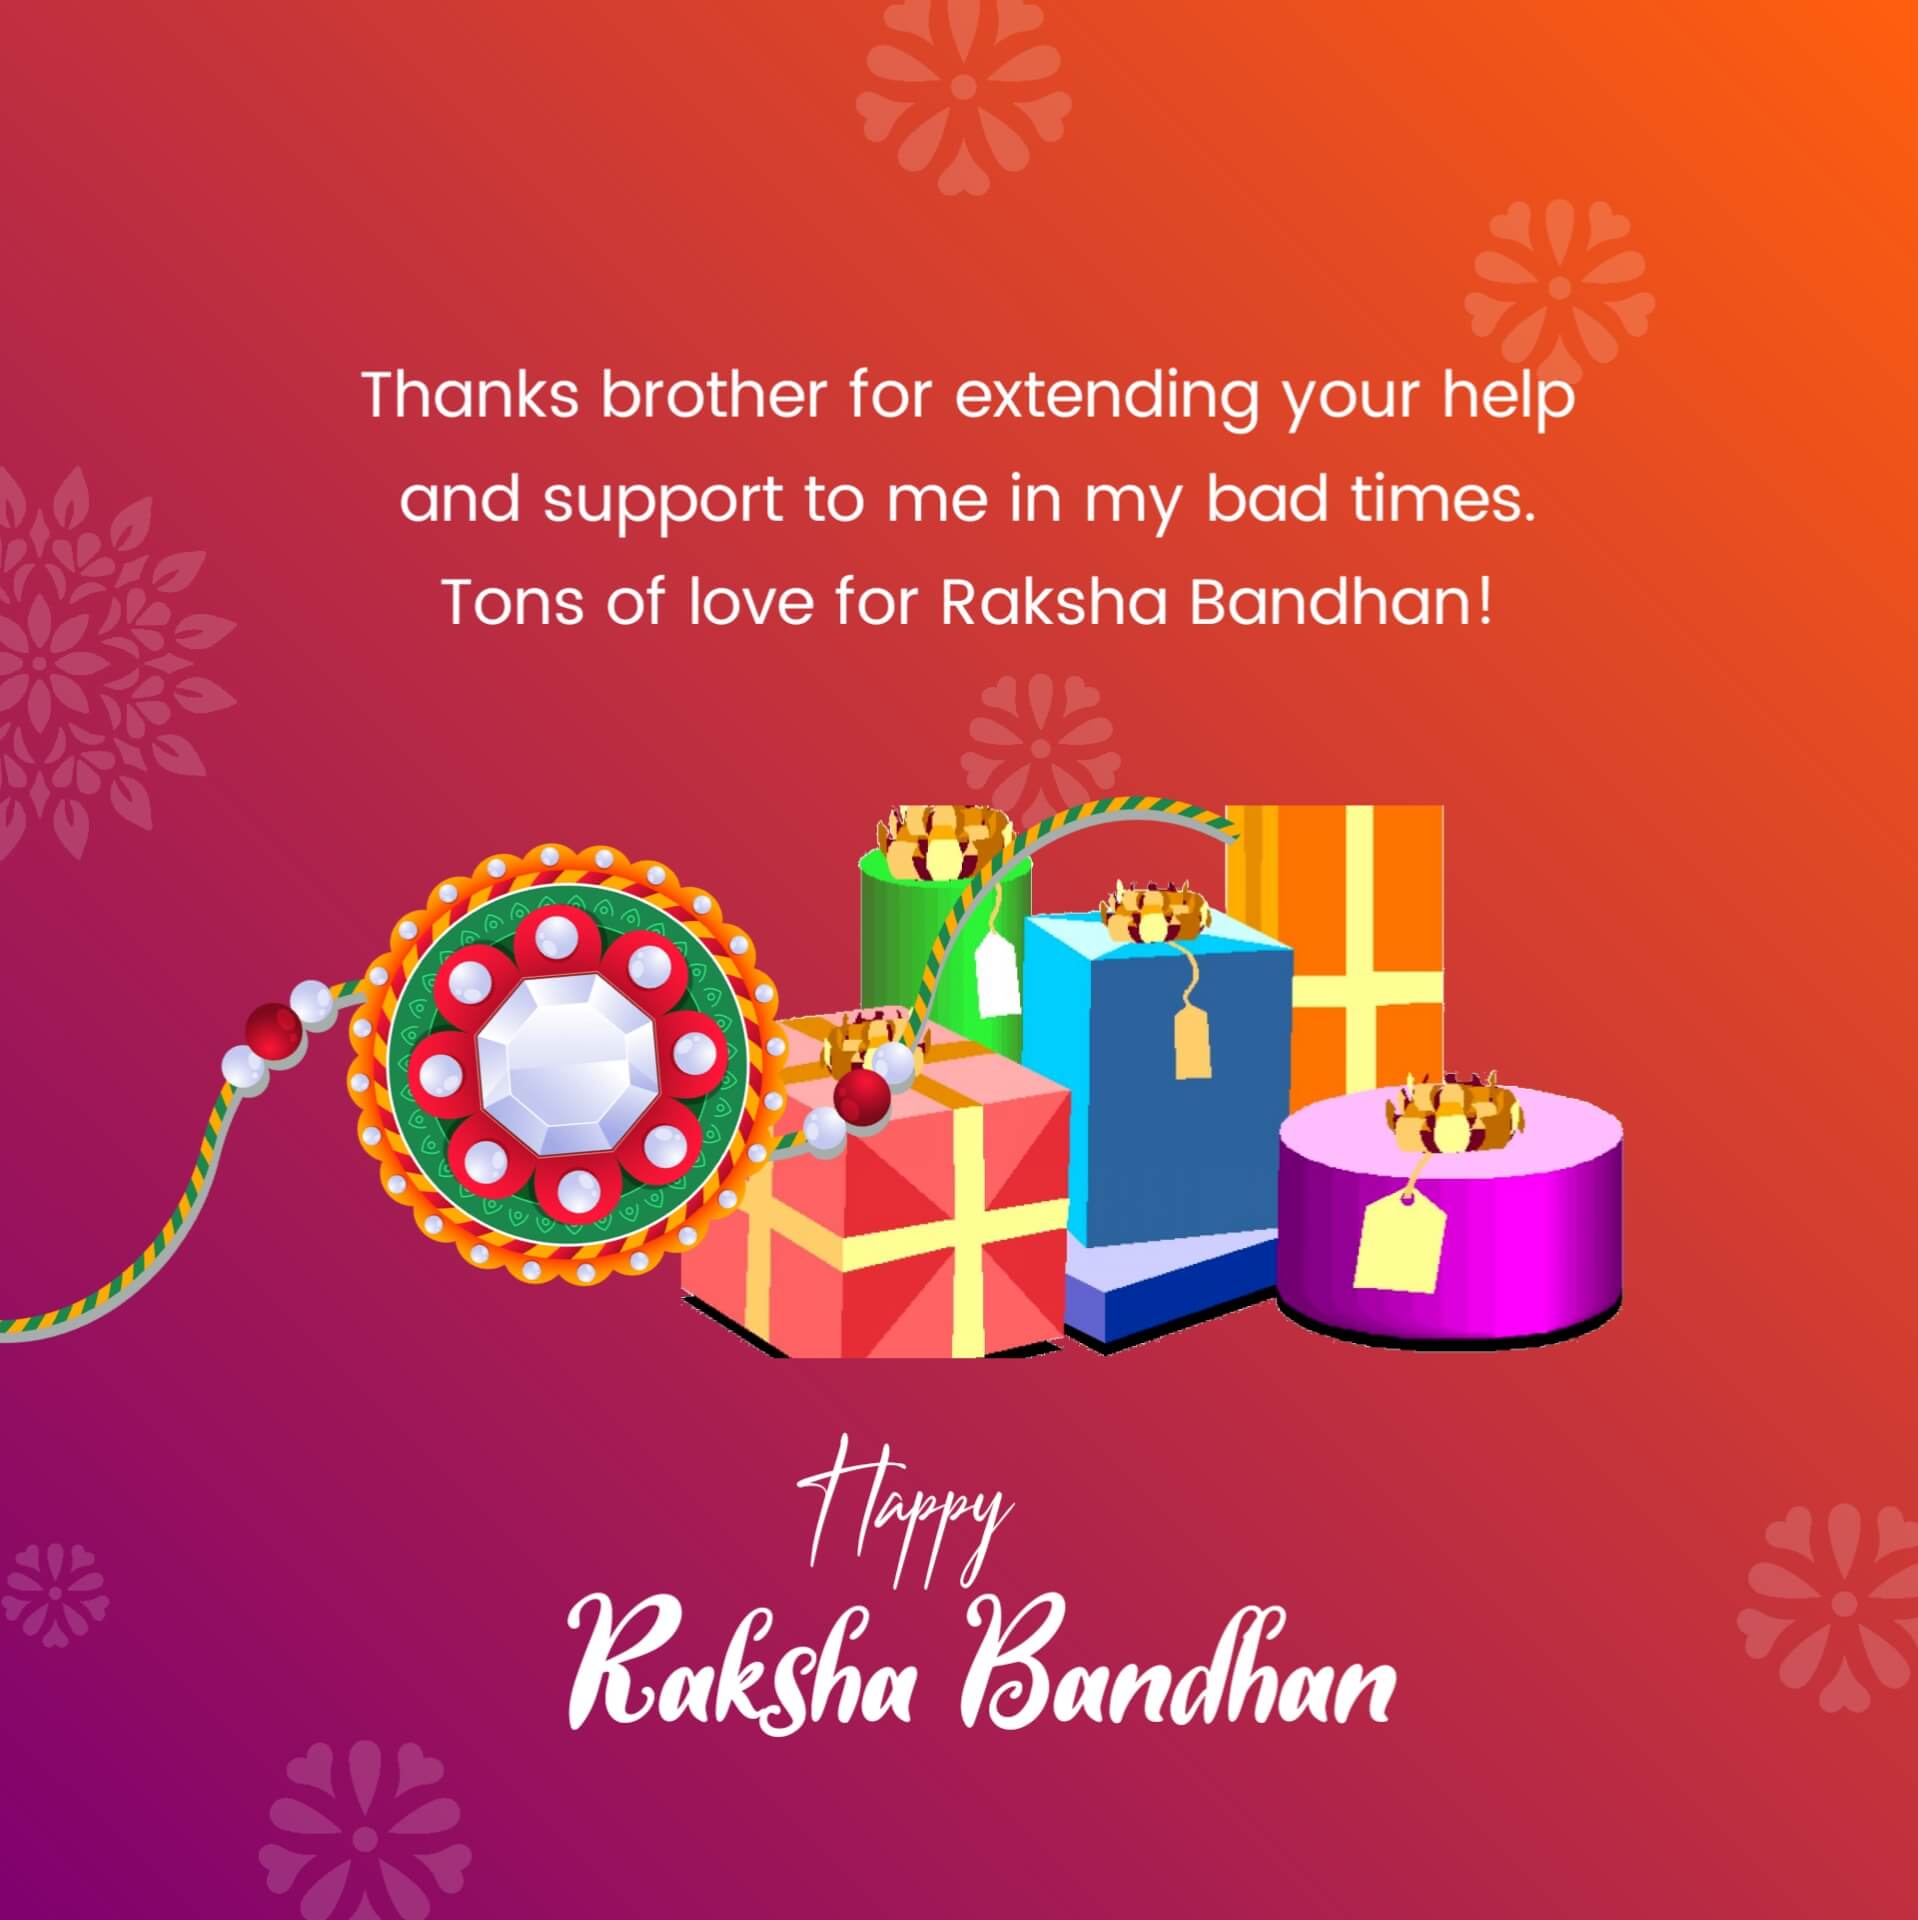 Raksha Bandhan Wishes card for Brother Image